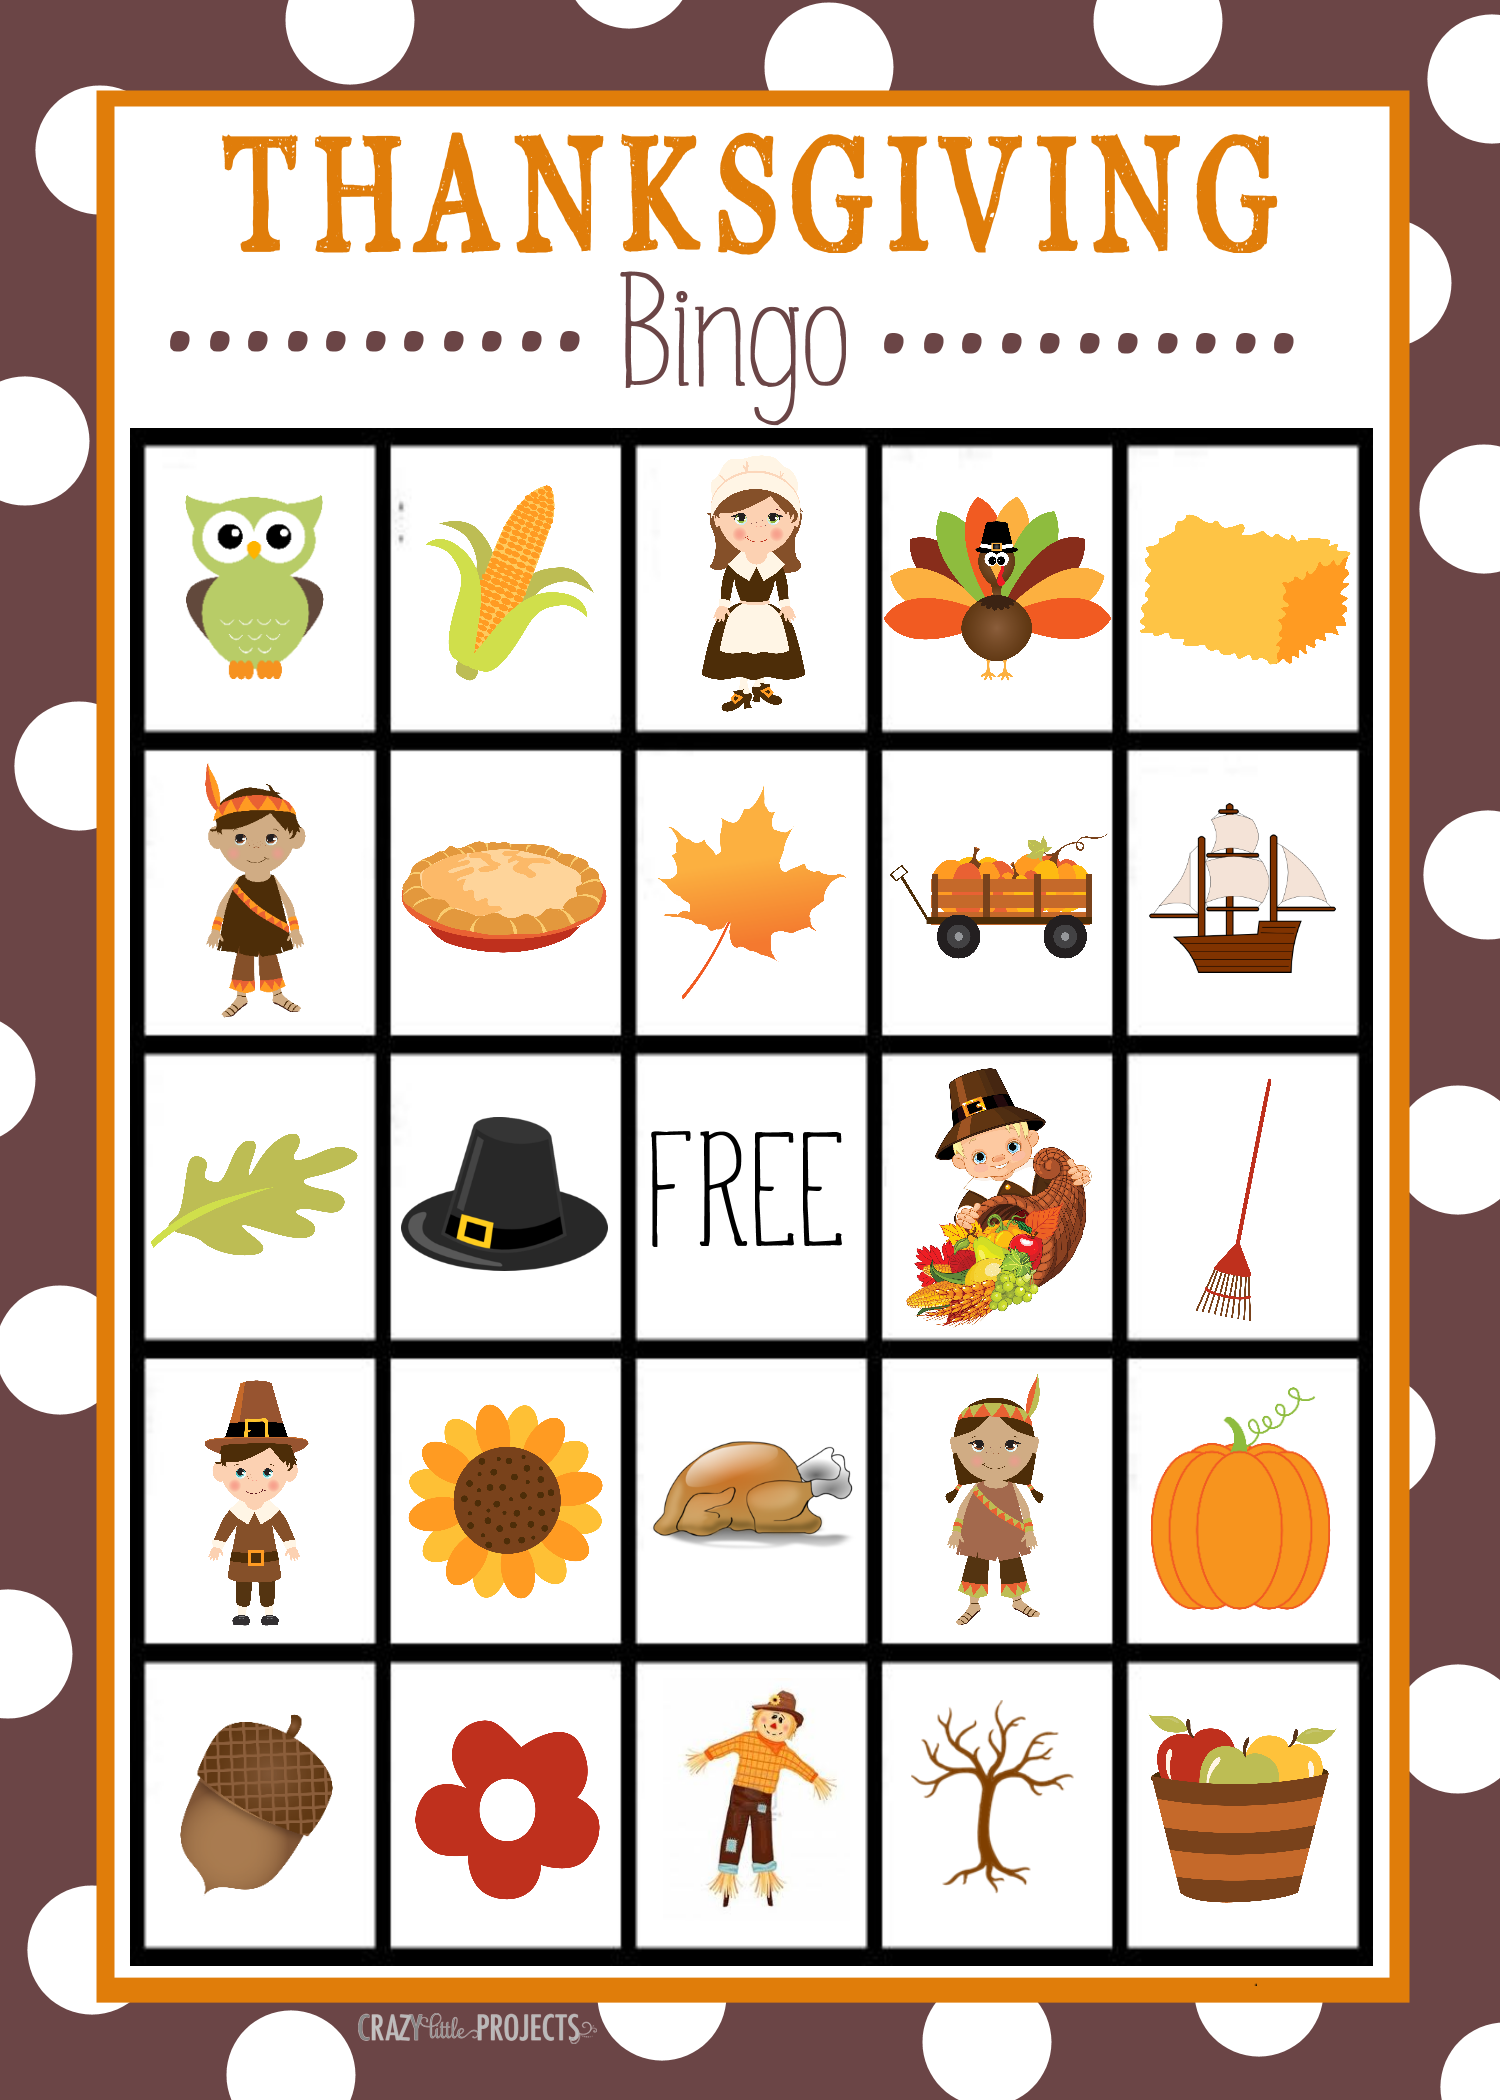 Thanksgiving Bingo Card #10: Crazy Little Projects Thanksgiving Bingo